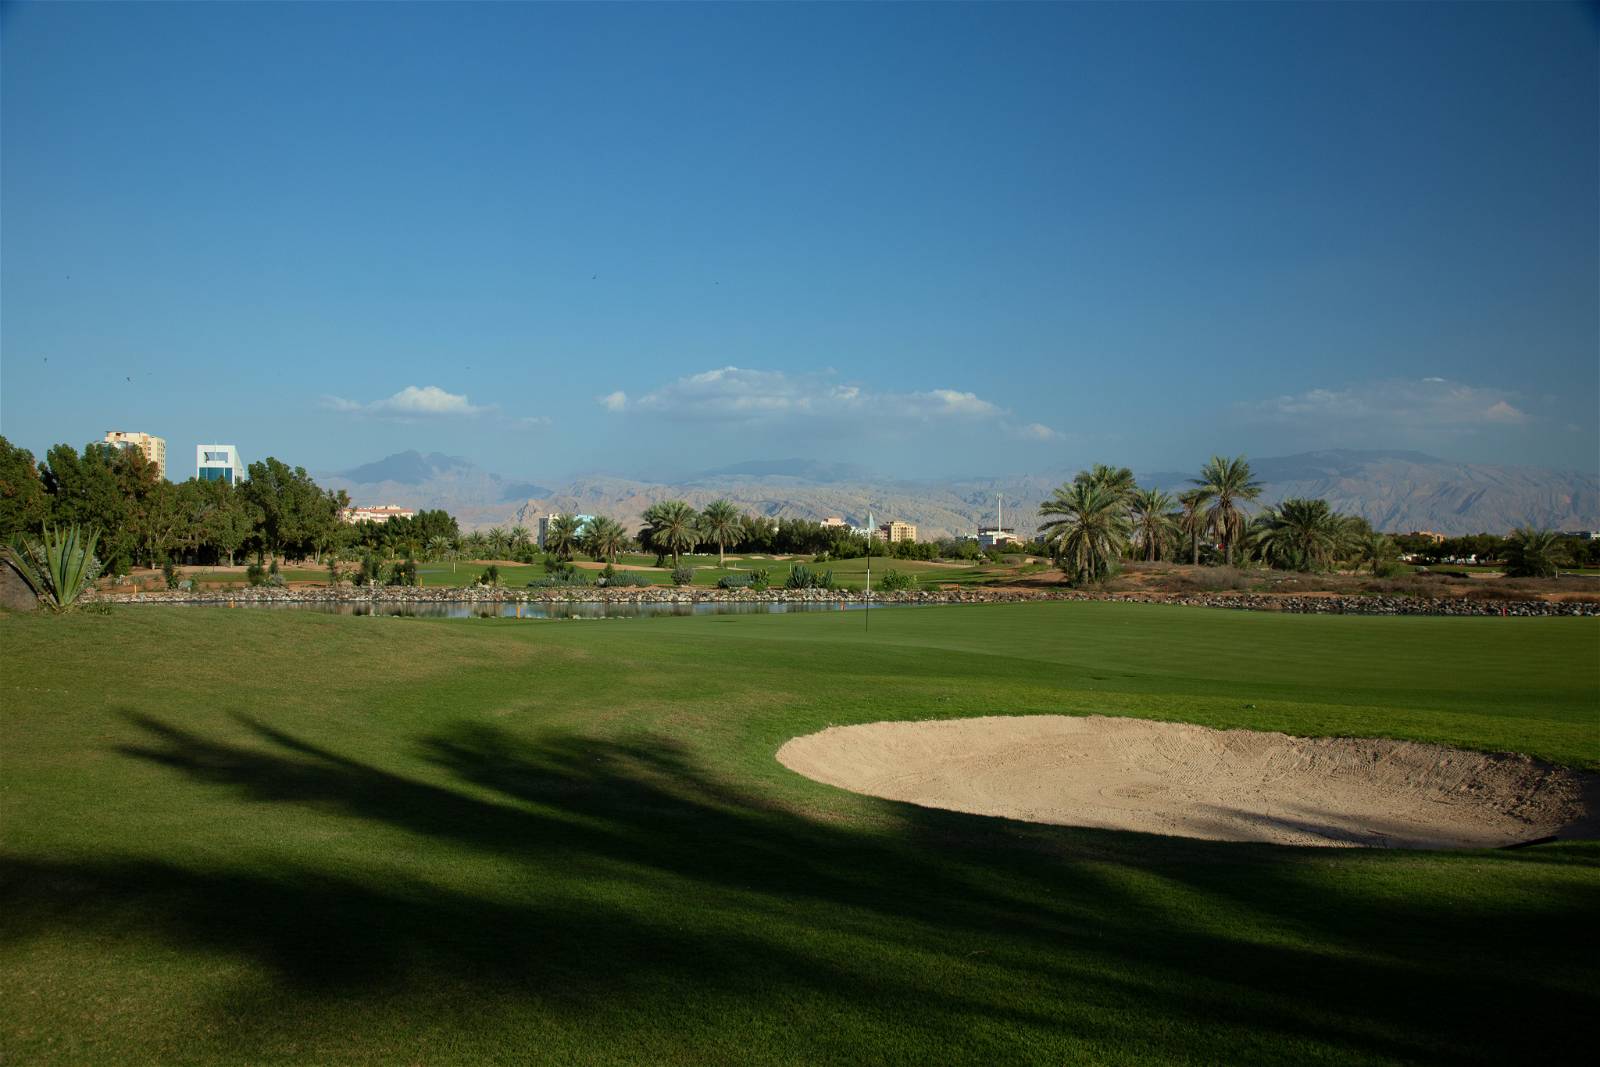 Greenside Bunker, Tower Links Golf Club, Dubai, United Arab Emirates